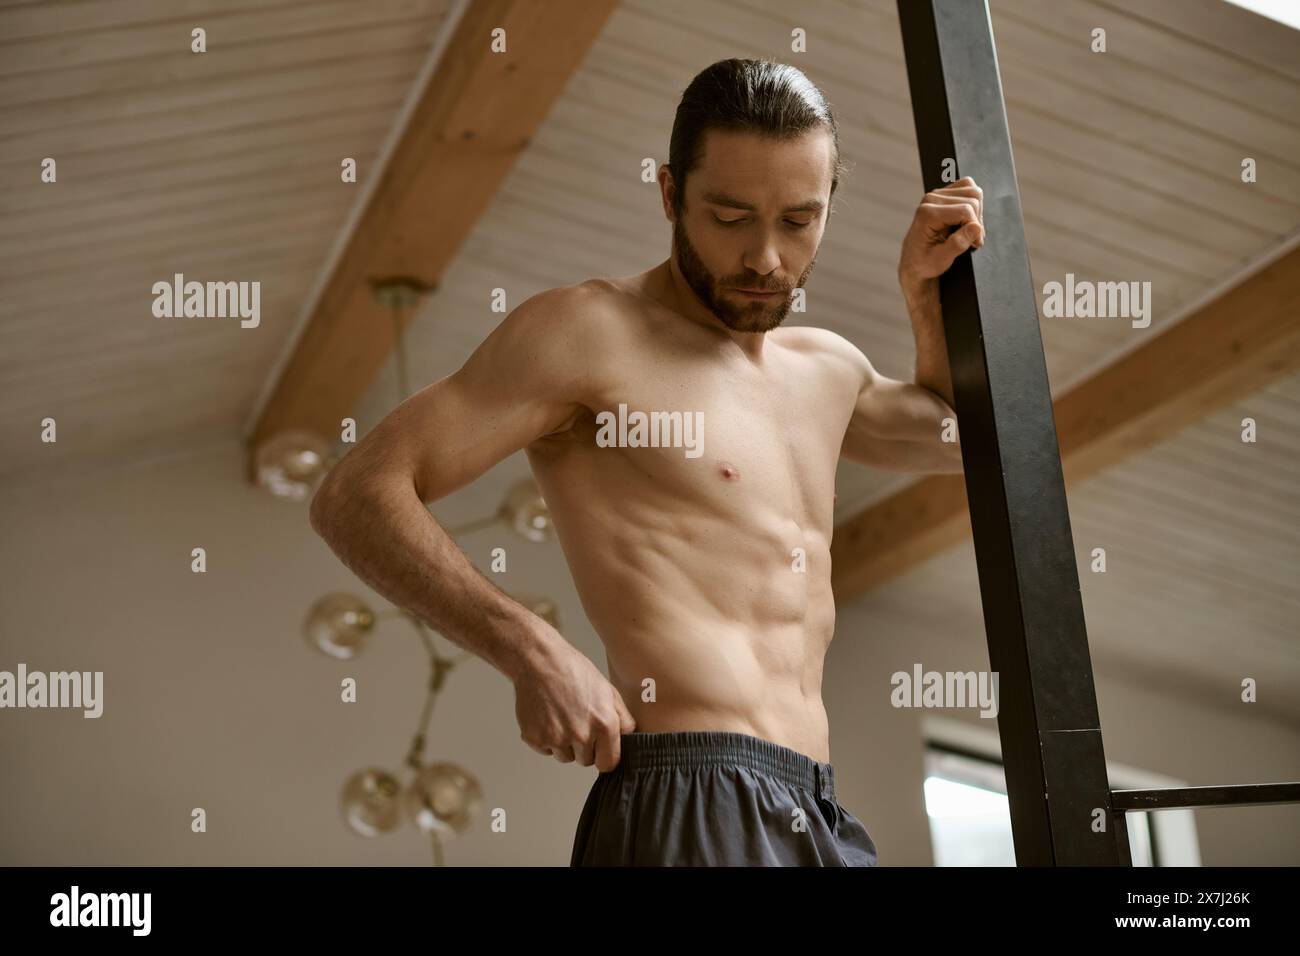 Shirtless man tones muscles at home. Stock Photo